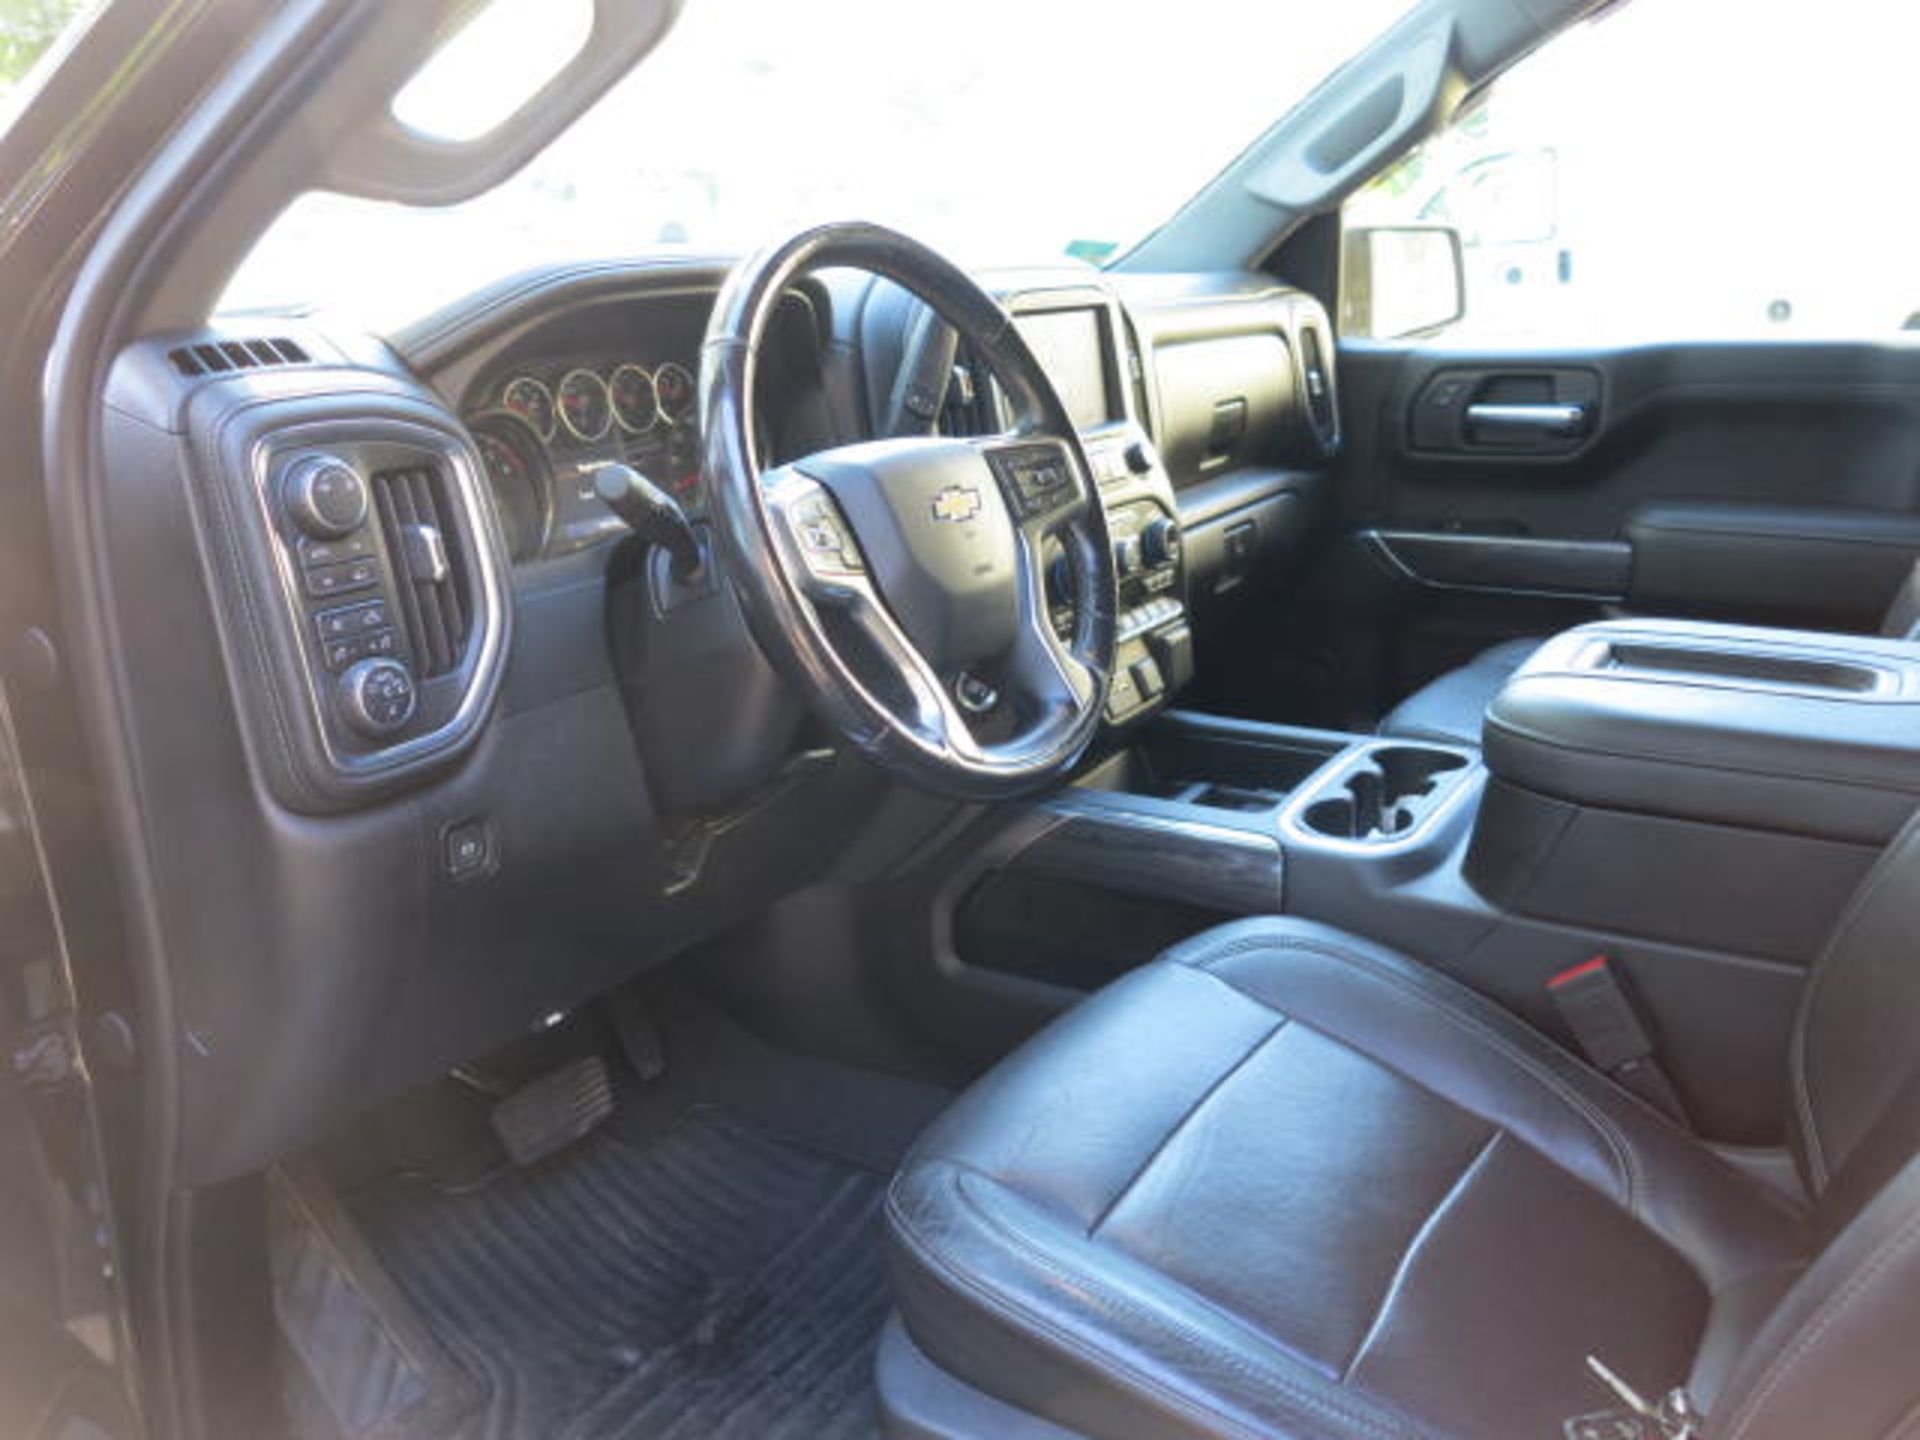 2019 Chevy Silverado 4WD LTZ DBL, 5.3L Eco-Tech V8 with Transmission, 8 Speed Automatic, LTZ Plus - Image 5 of 13